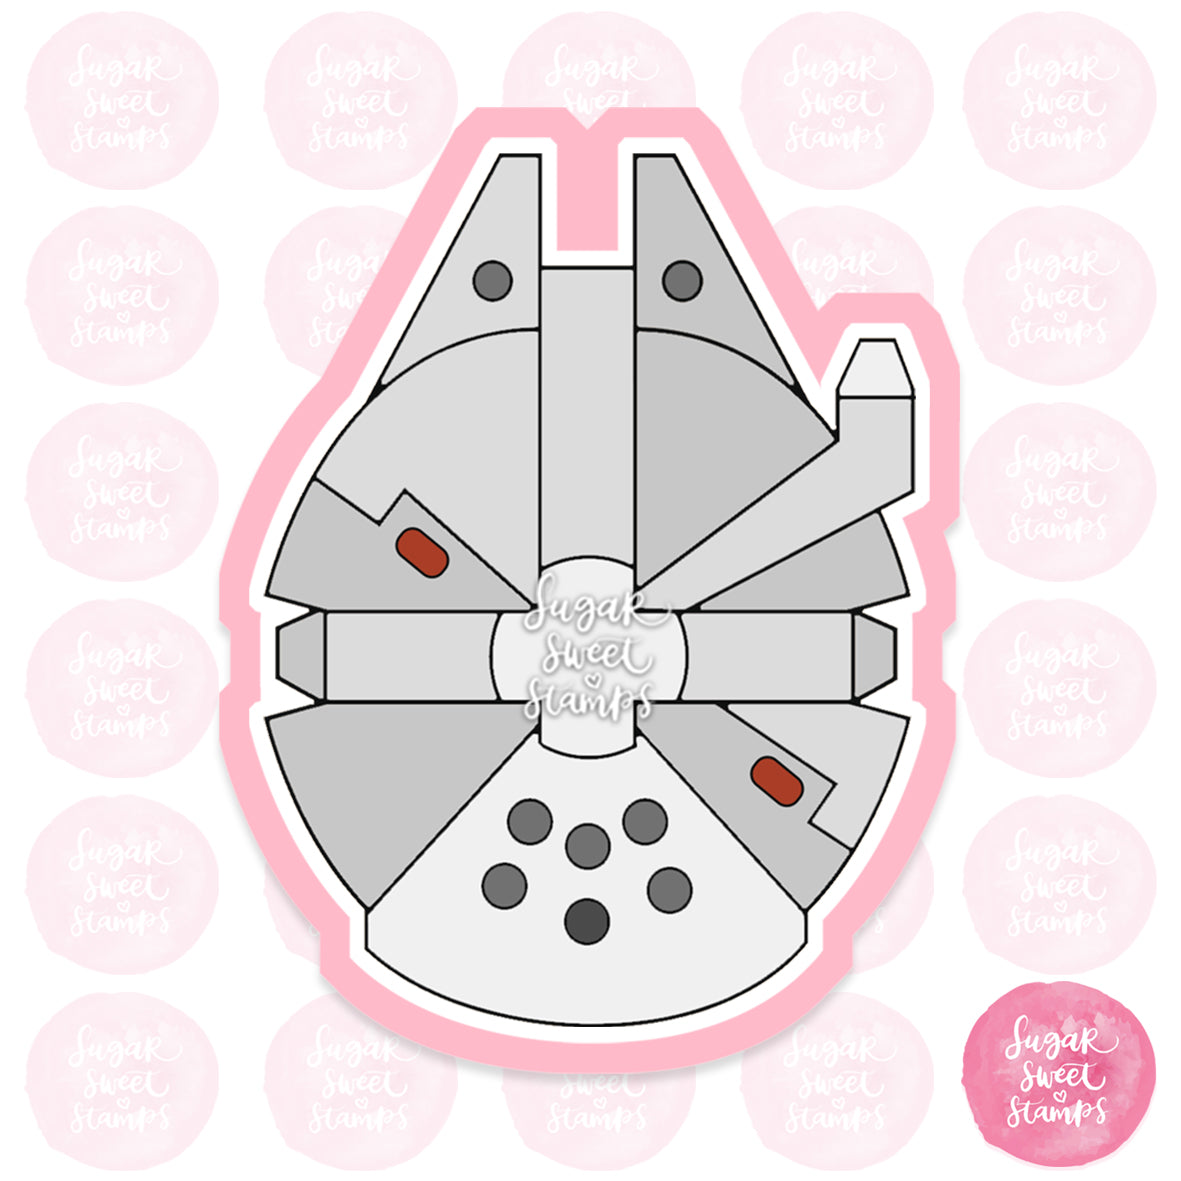 star wars starship space ship millenium falcon sci fi pop culture custom 3d printed cookie cutter